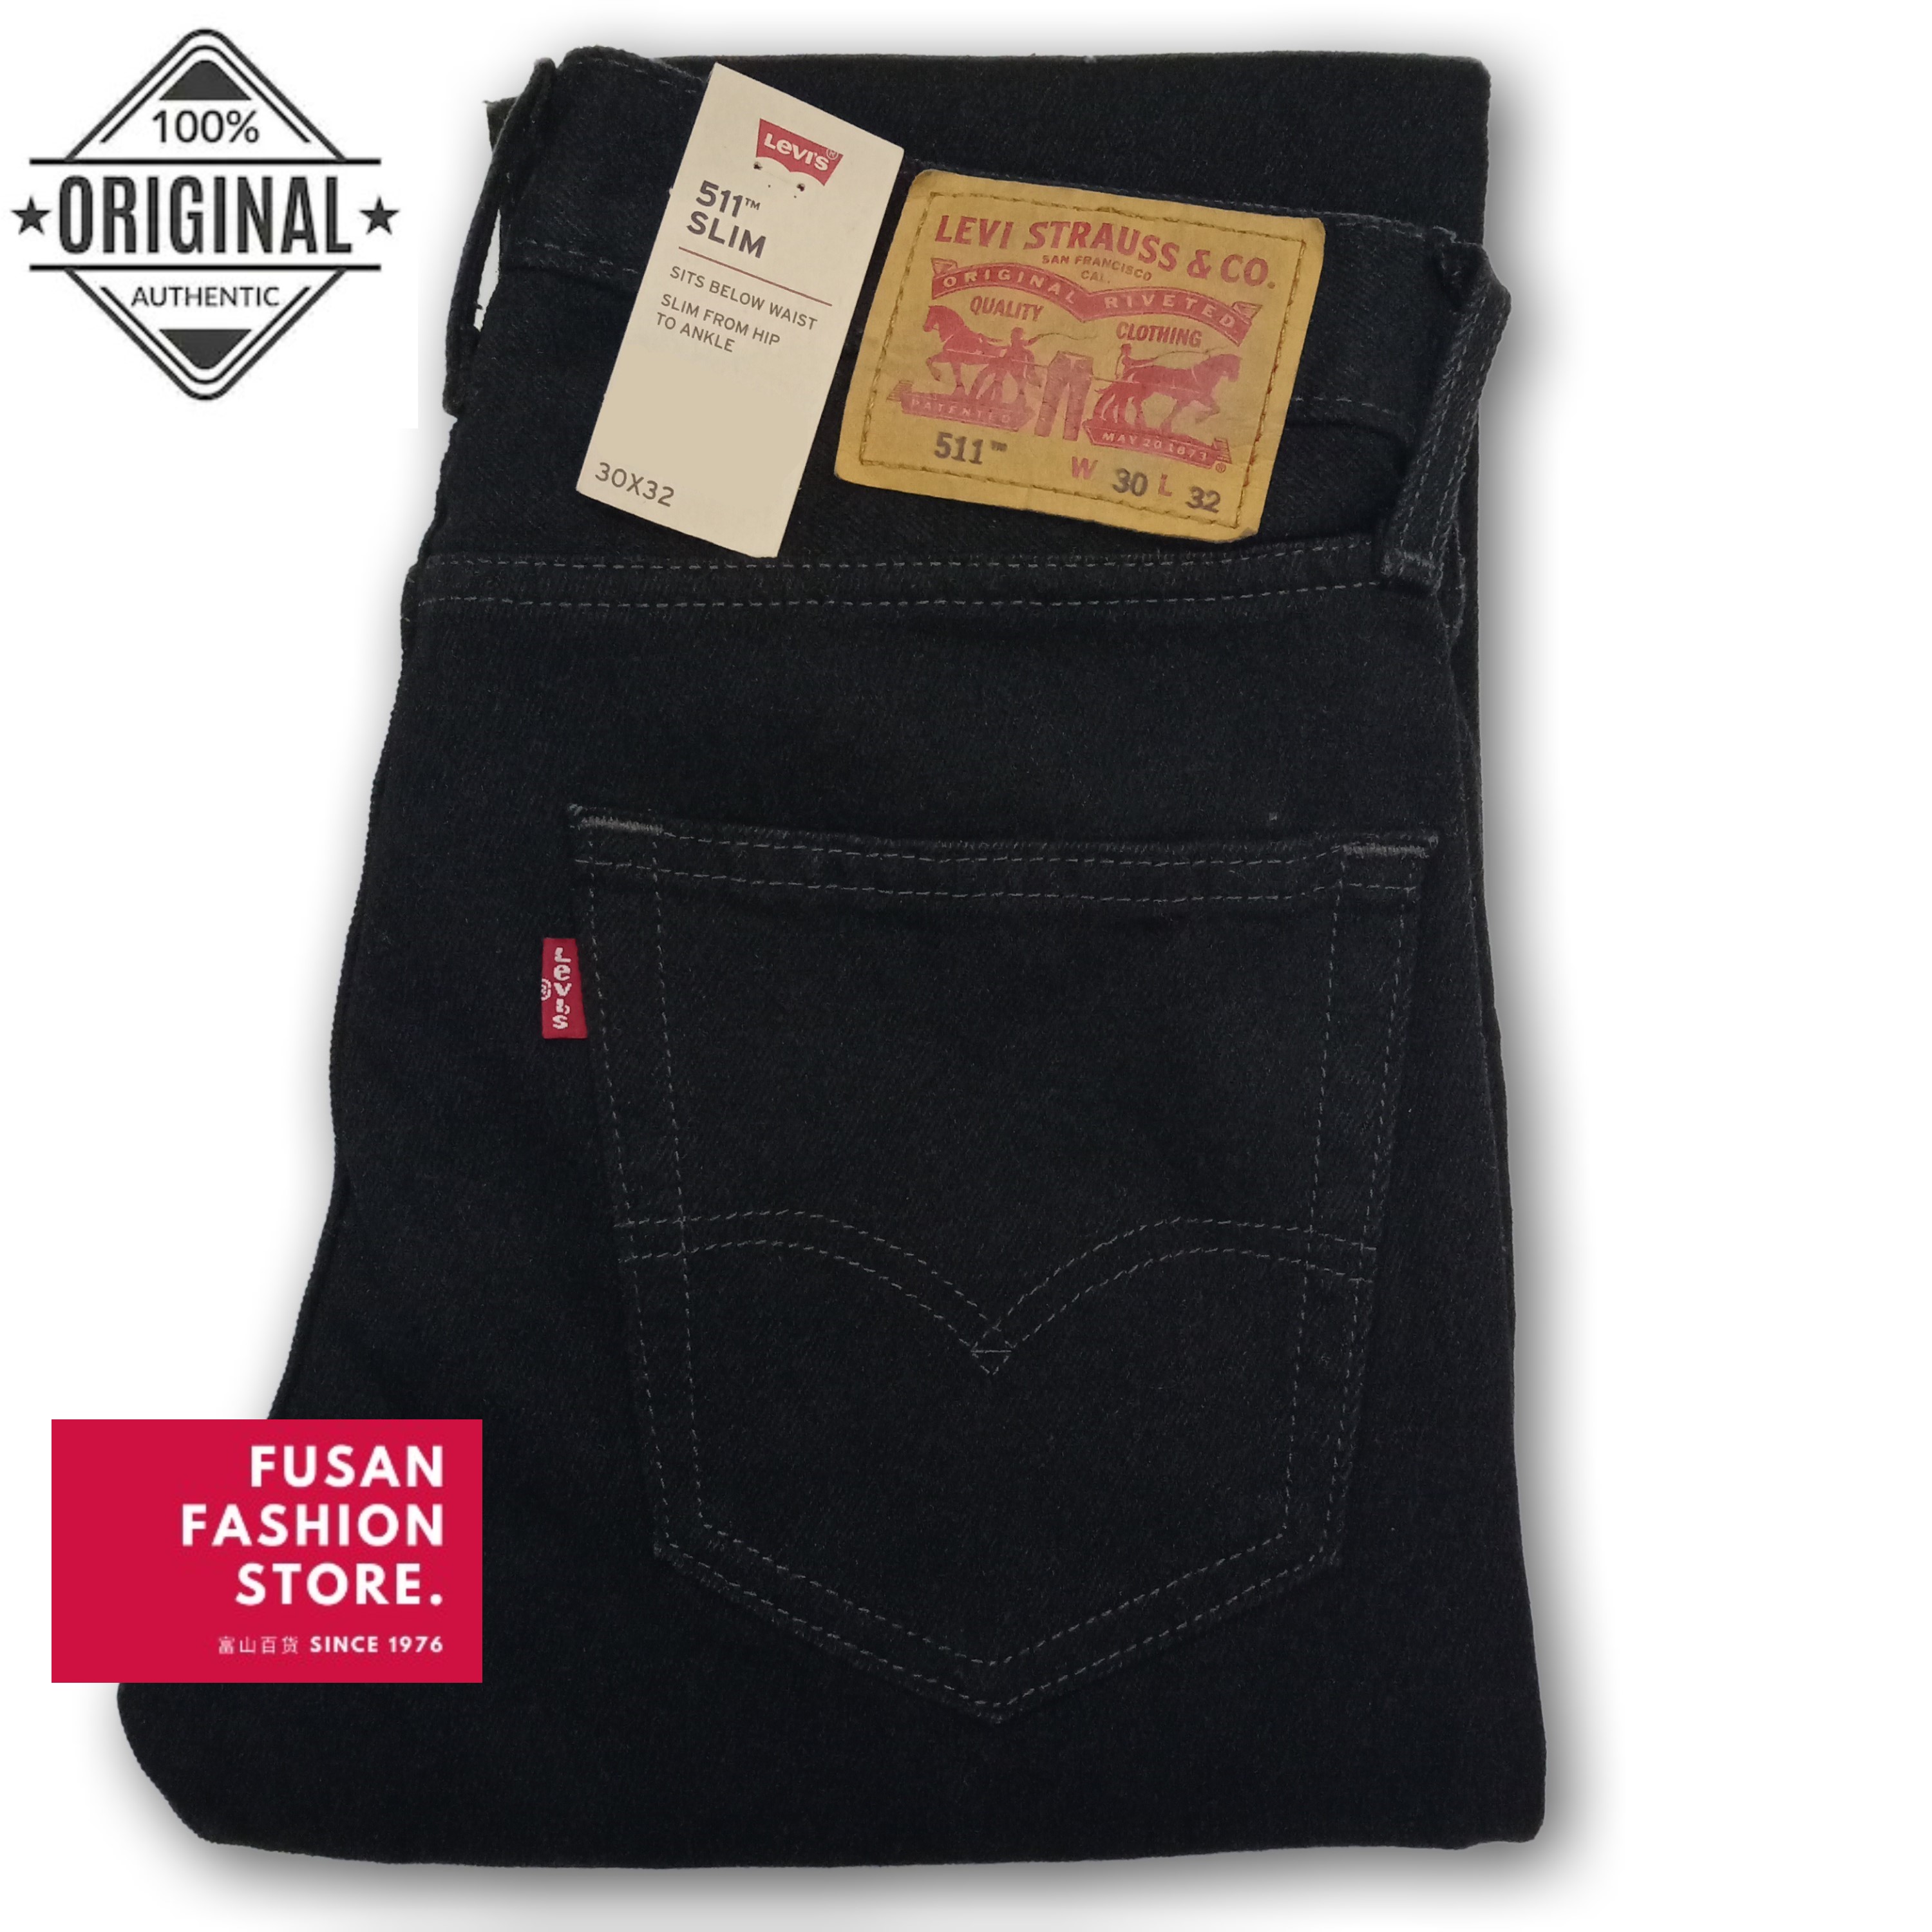 Original] Levis 511 Slim Fit Jeans Super Black 511-3230 | Lazada